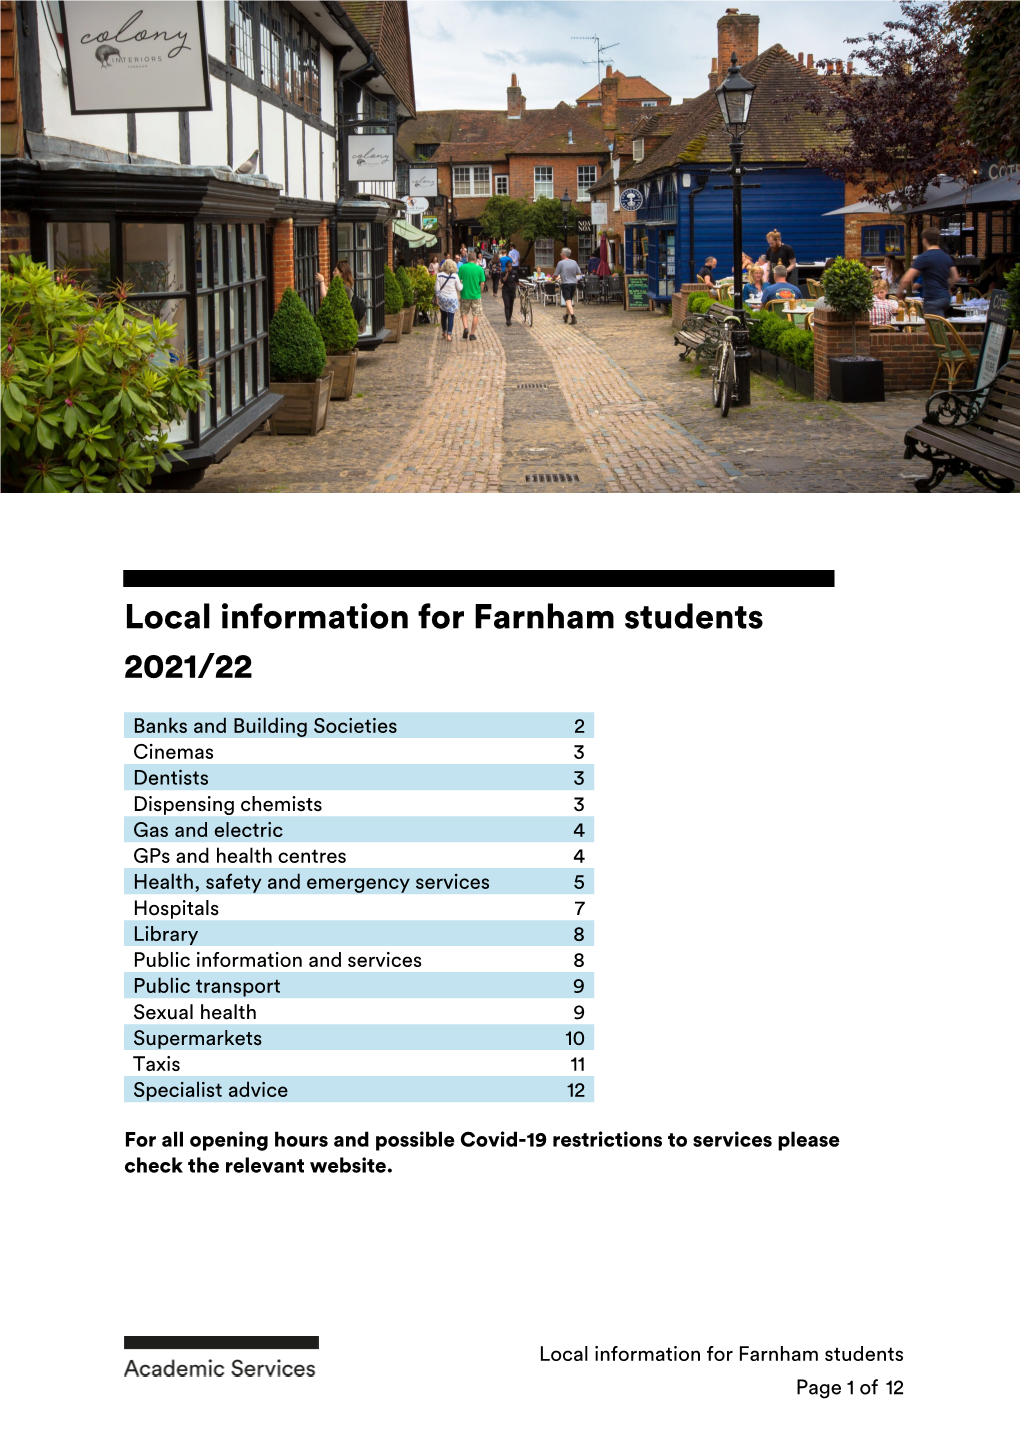 Local Information for Farnham Students 2021/22